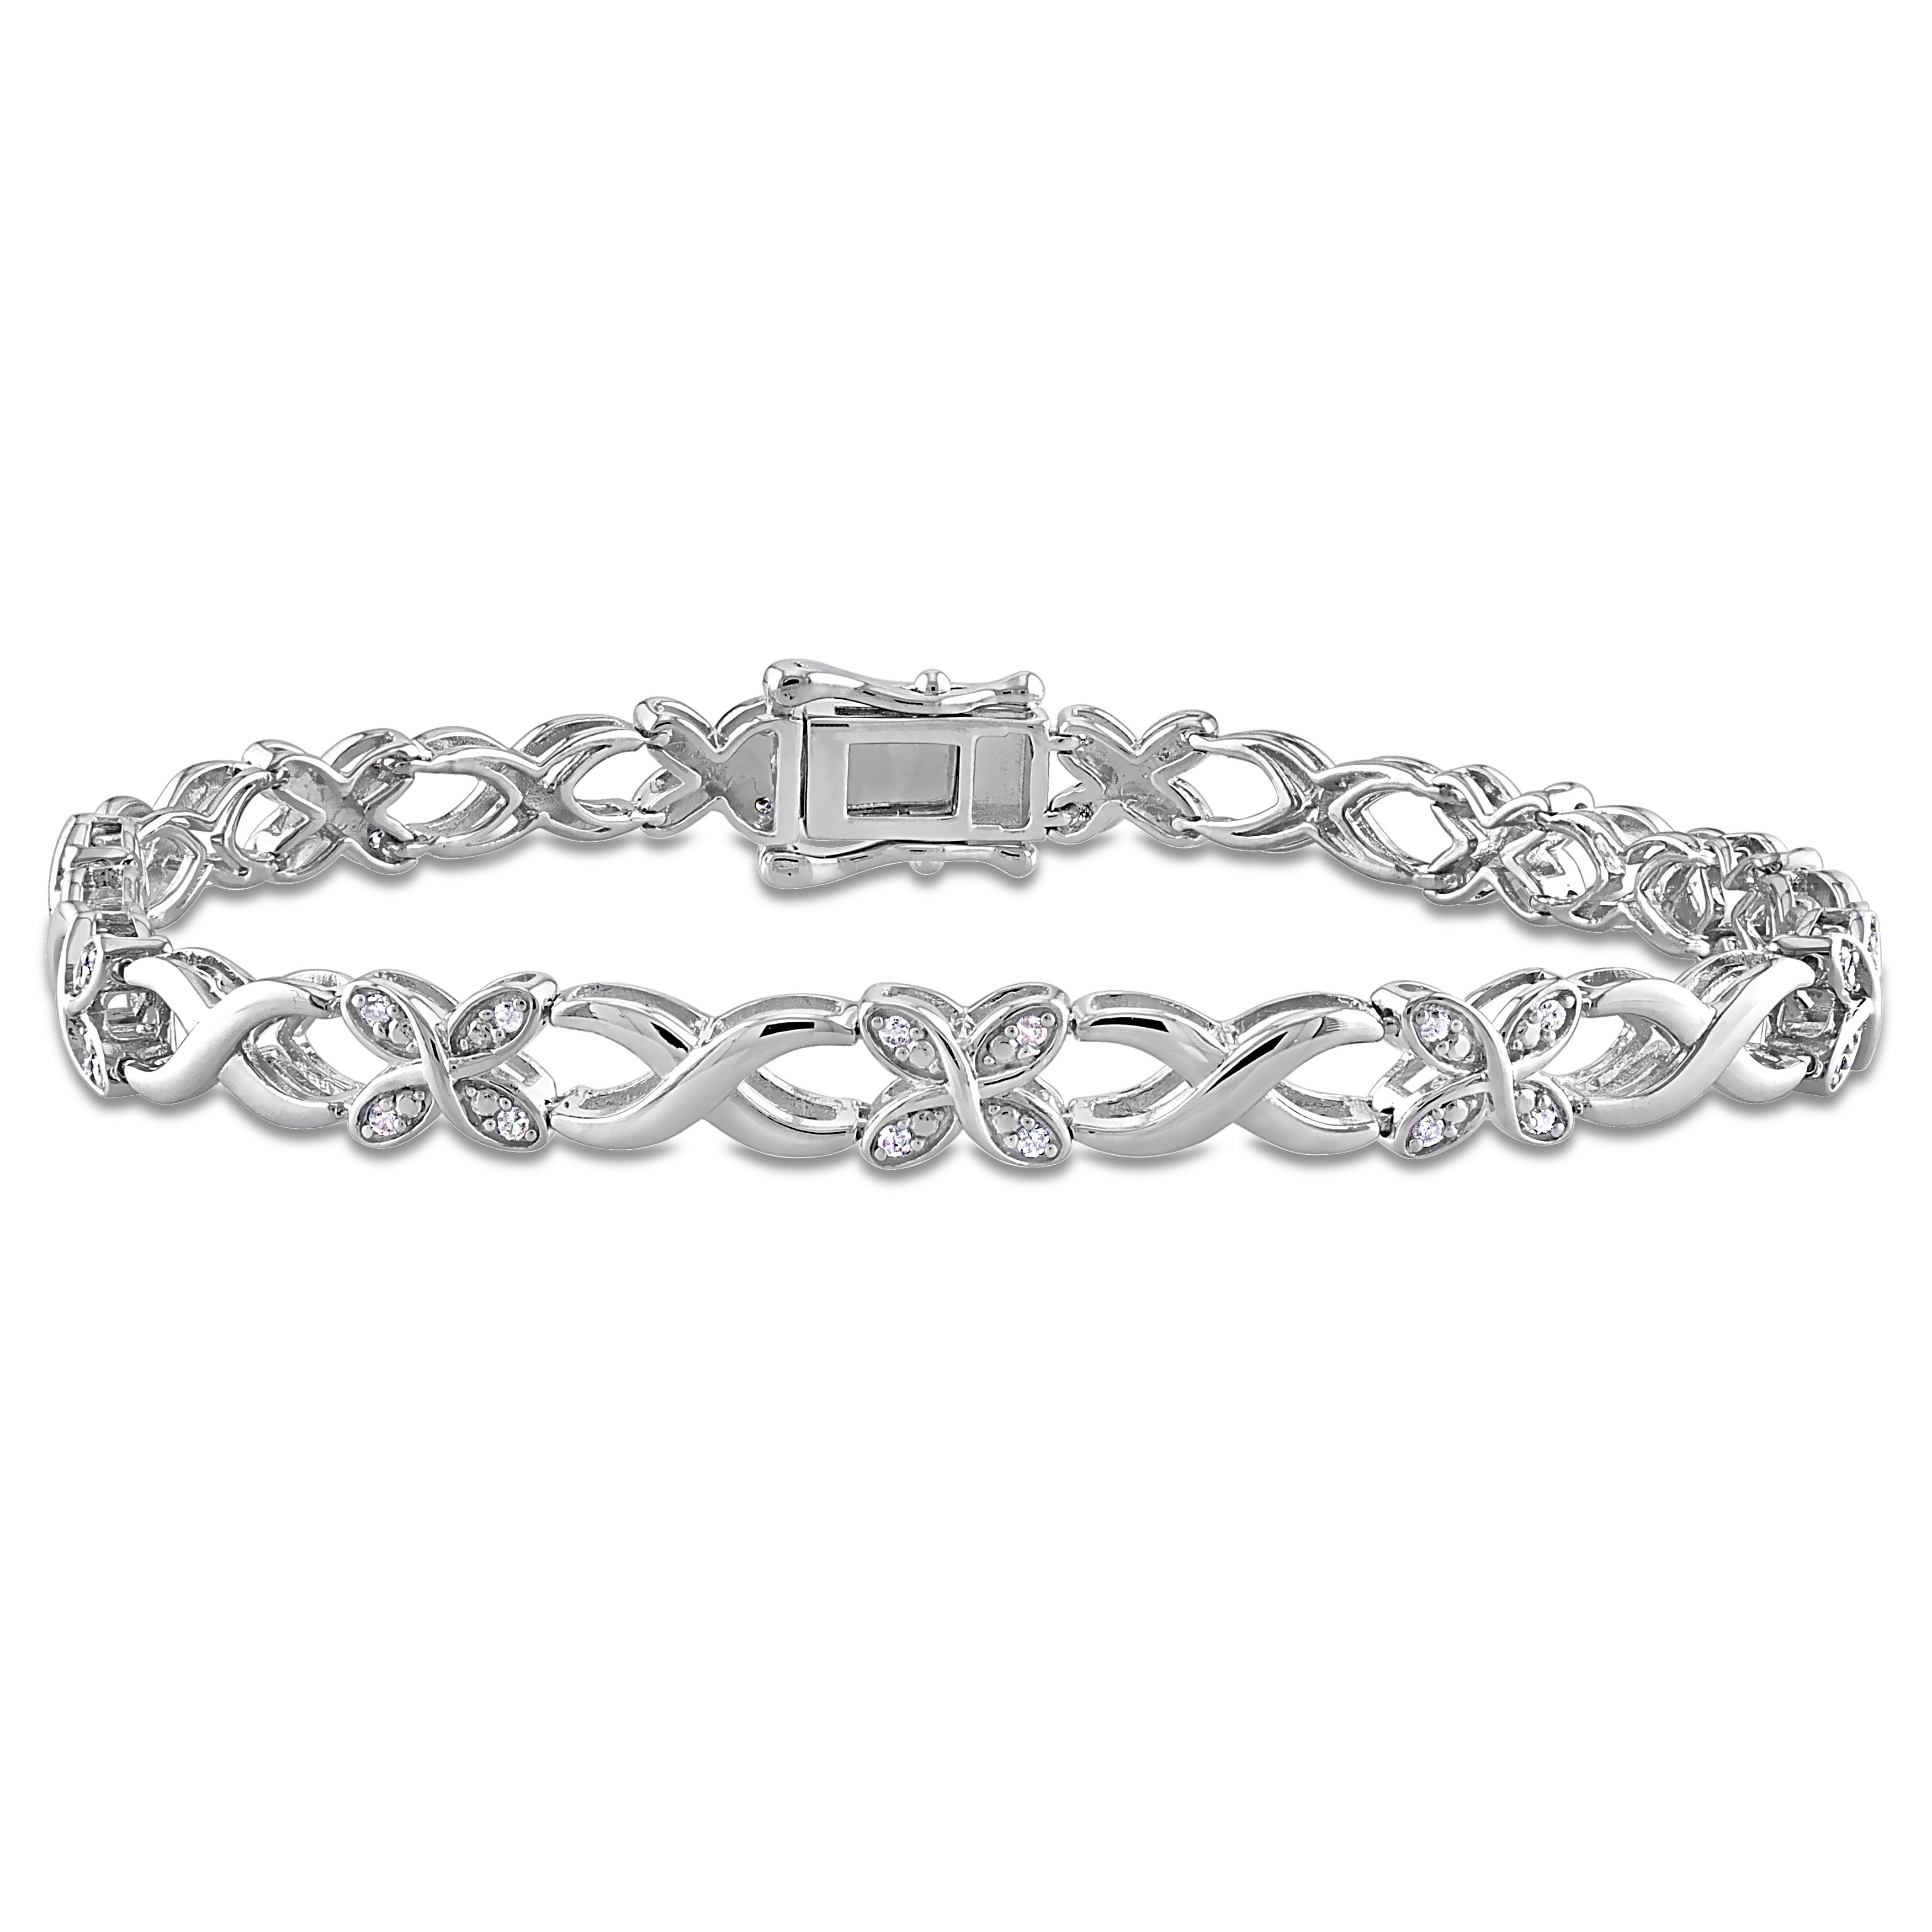 1/5 CT TDW Diamond Infinity Link Bracelet in Sterling Silver - 7.25 in.